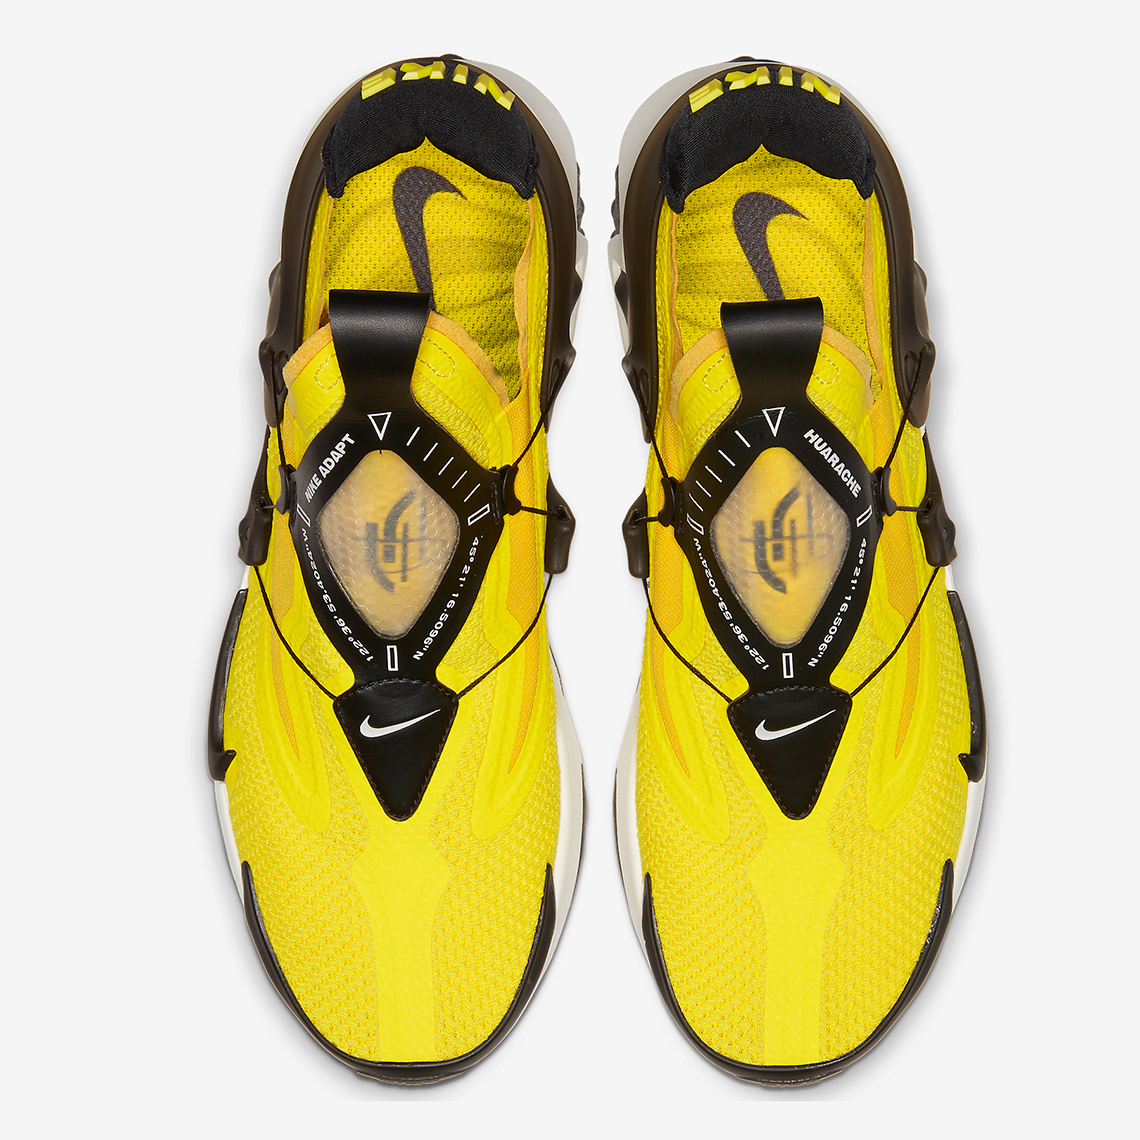 Nike Adapt Huarache Yellow BV6397-710 Release Info | SneakerNews.com